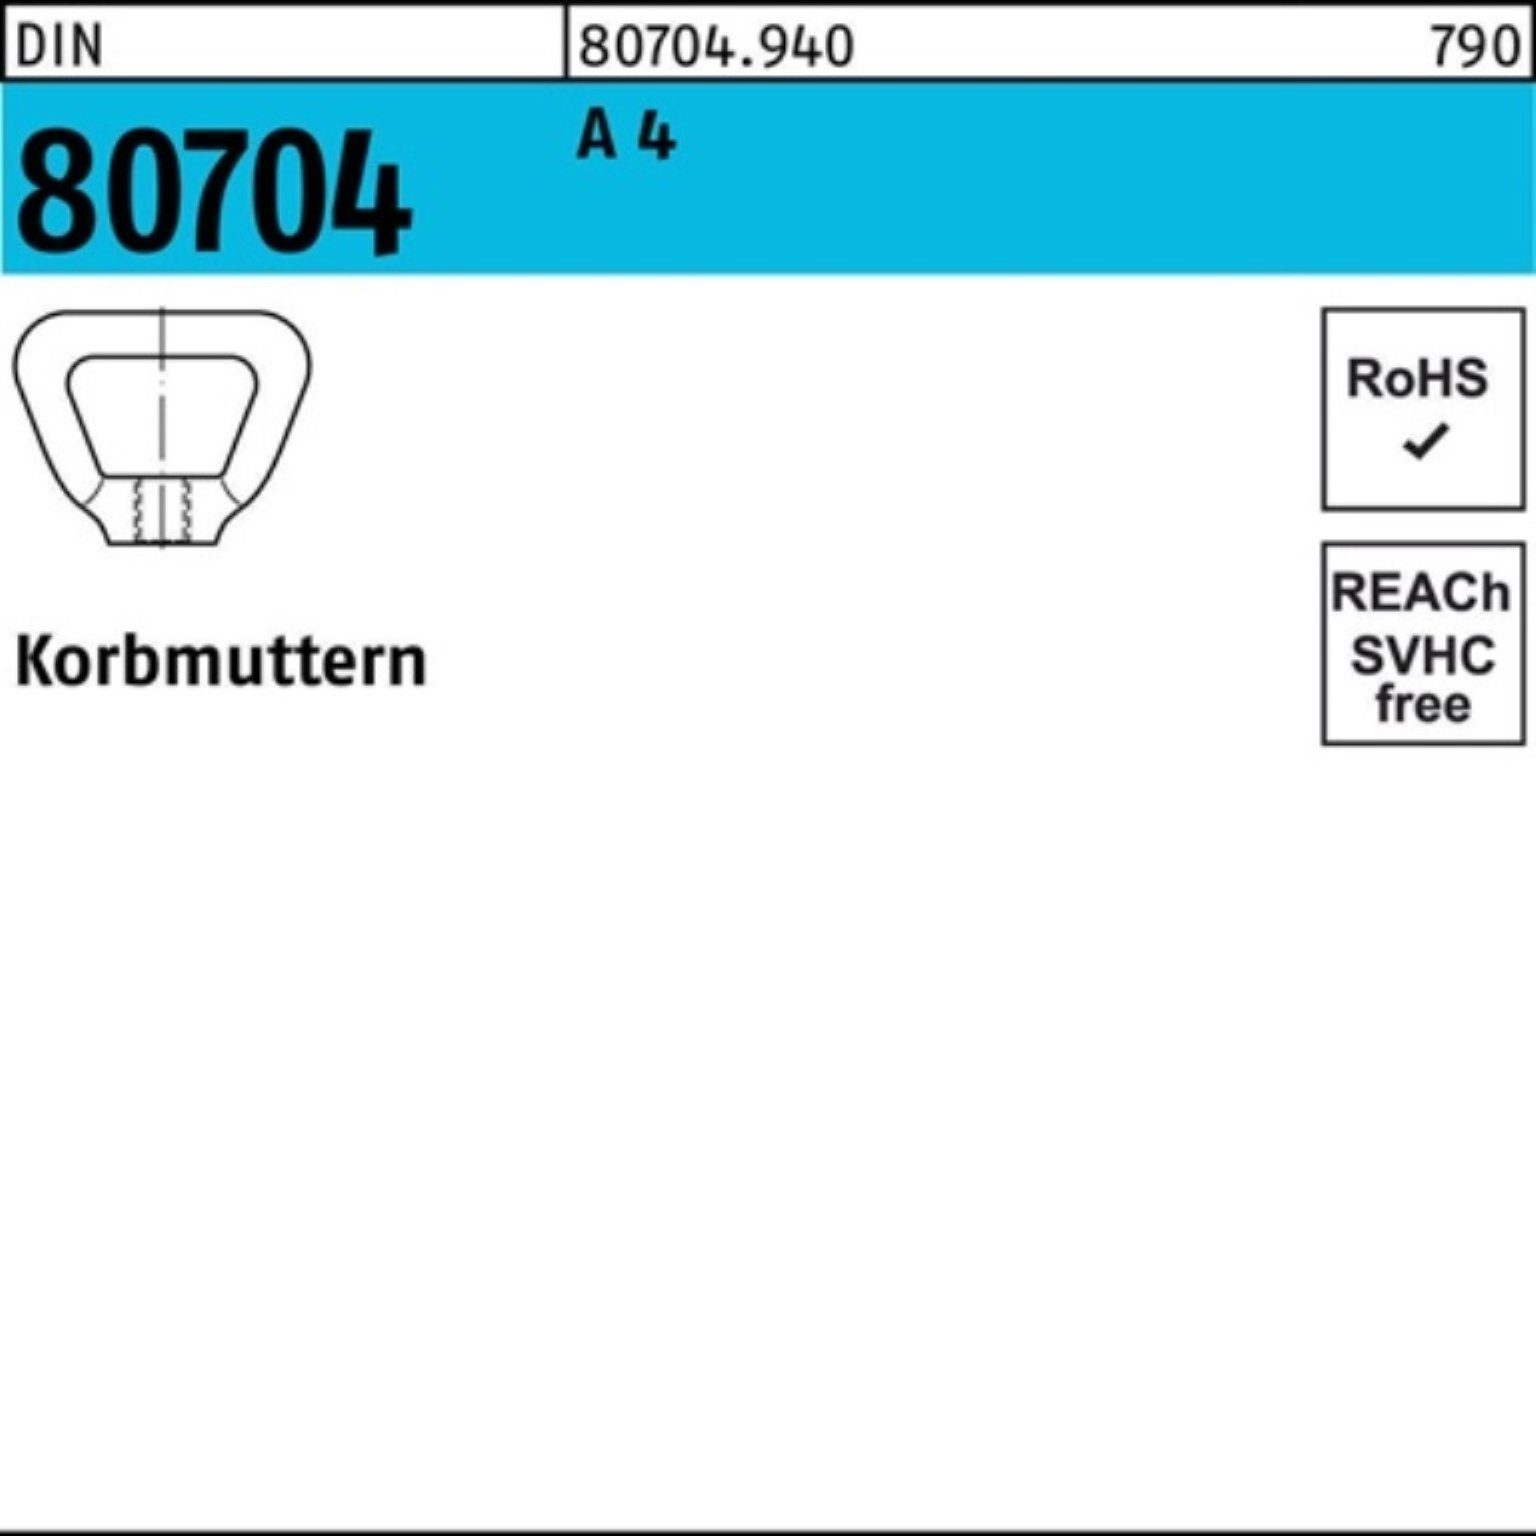 Reyher Korbmutter 100er Pack Korbmutter DIN 80704 M8 A 4 1 Stück DIN 80704 A 4 Korbmutt